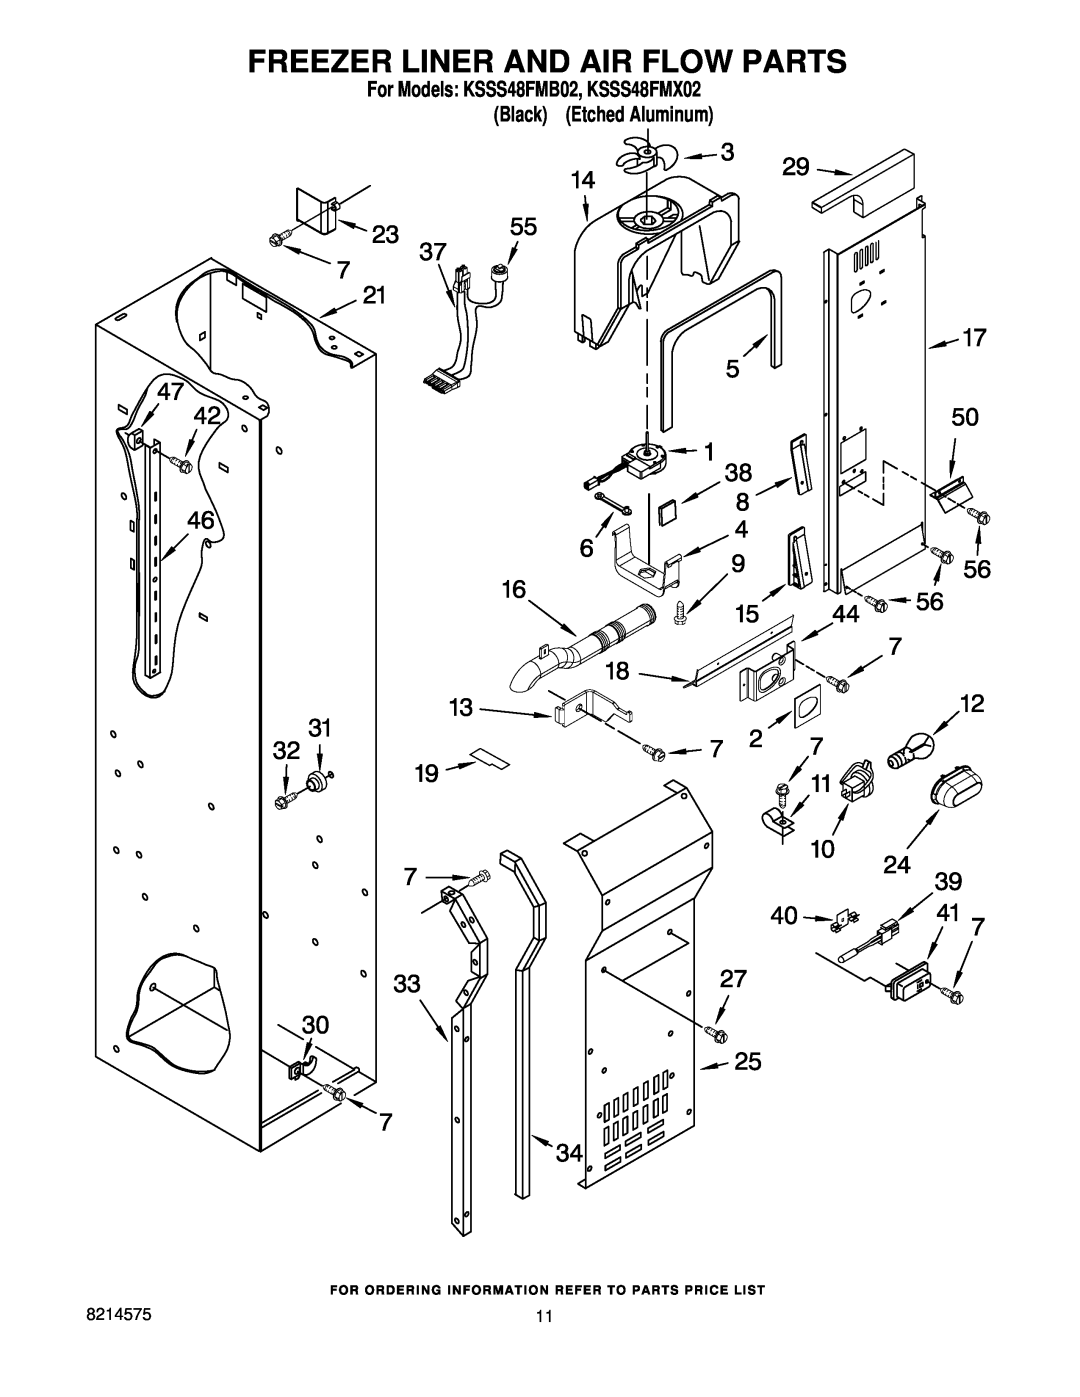 KitchenAid manual Freezer Liner And Air Flow Parts, For Models KSSS48FMB02, KSSS48FMX02 Black Etched Aluminum 